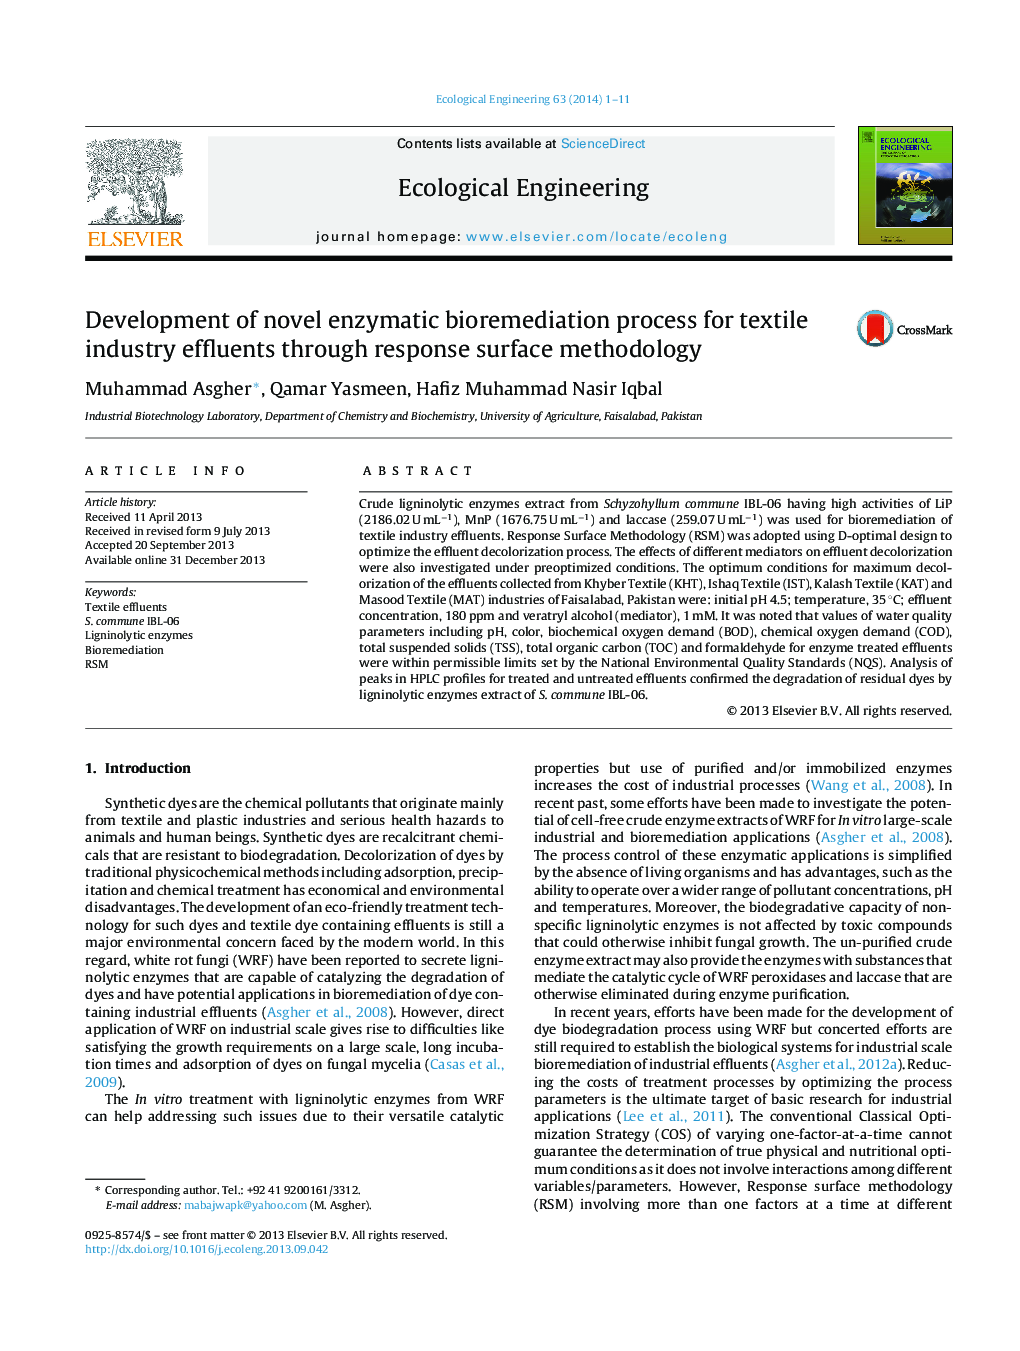 Development of novel enzymatic bioremediation process for textile industry effluents through response surface methodology